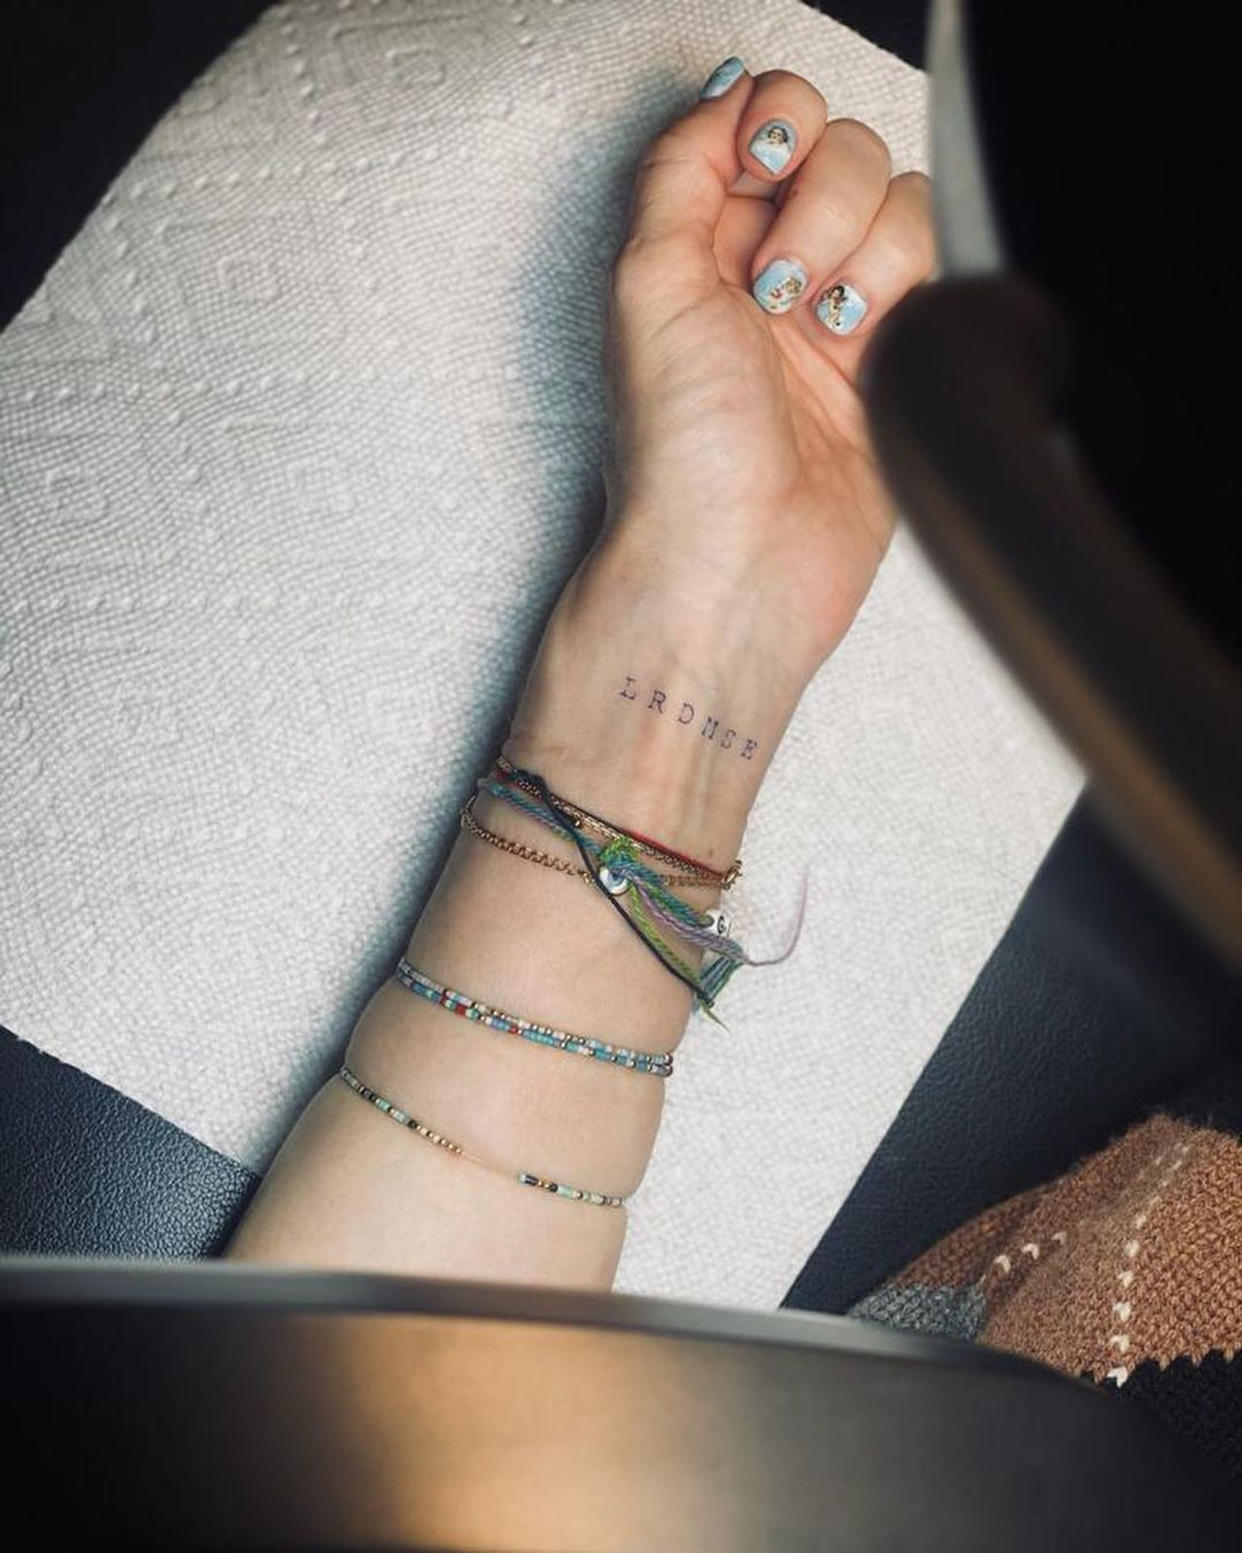 Her subtle tattoo honored her six children.  (madonna/ Instagram)